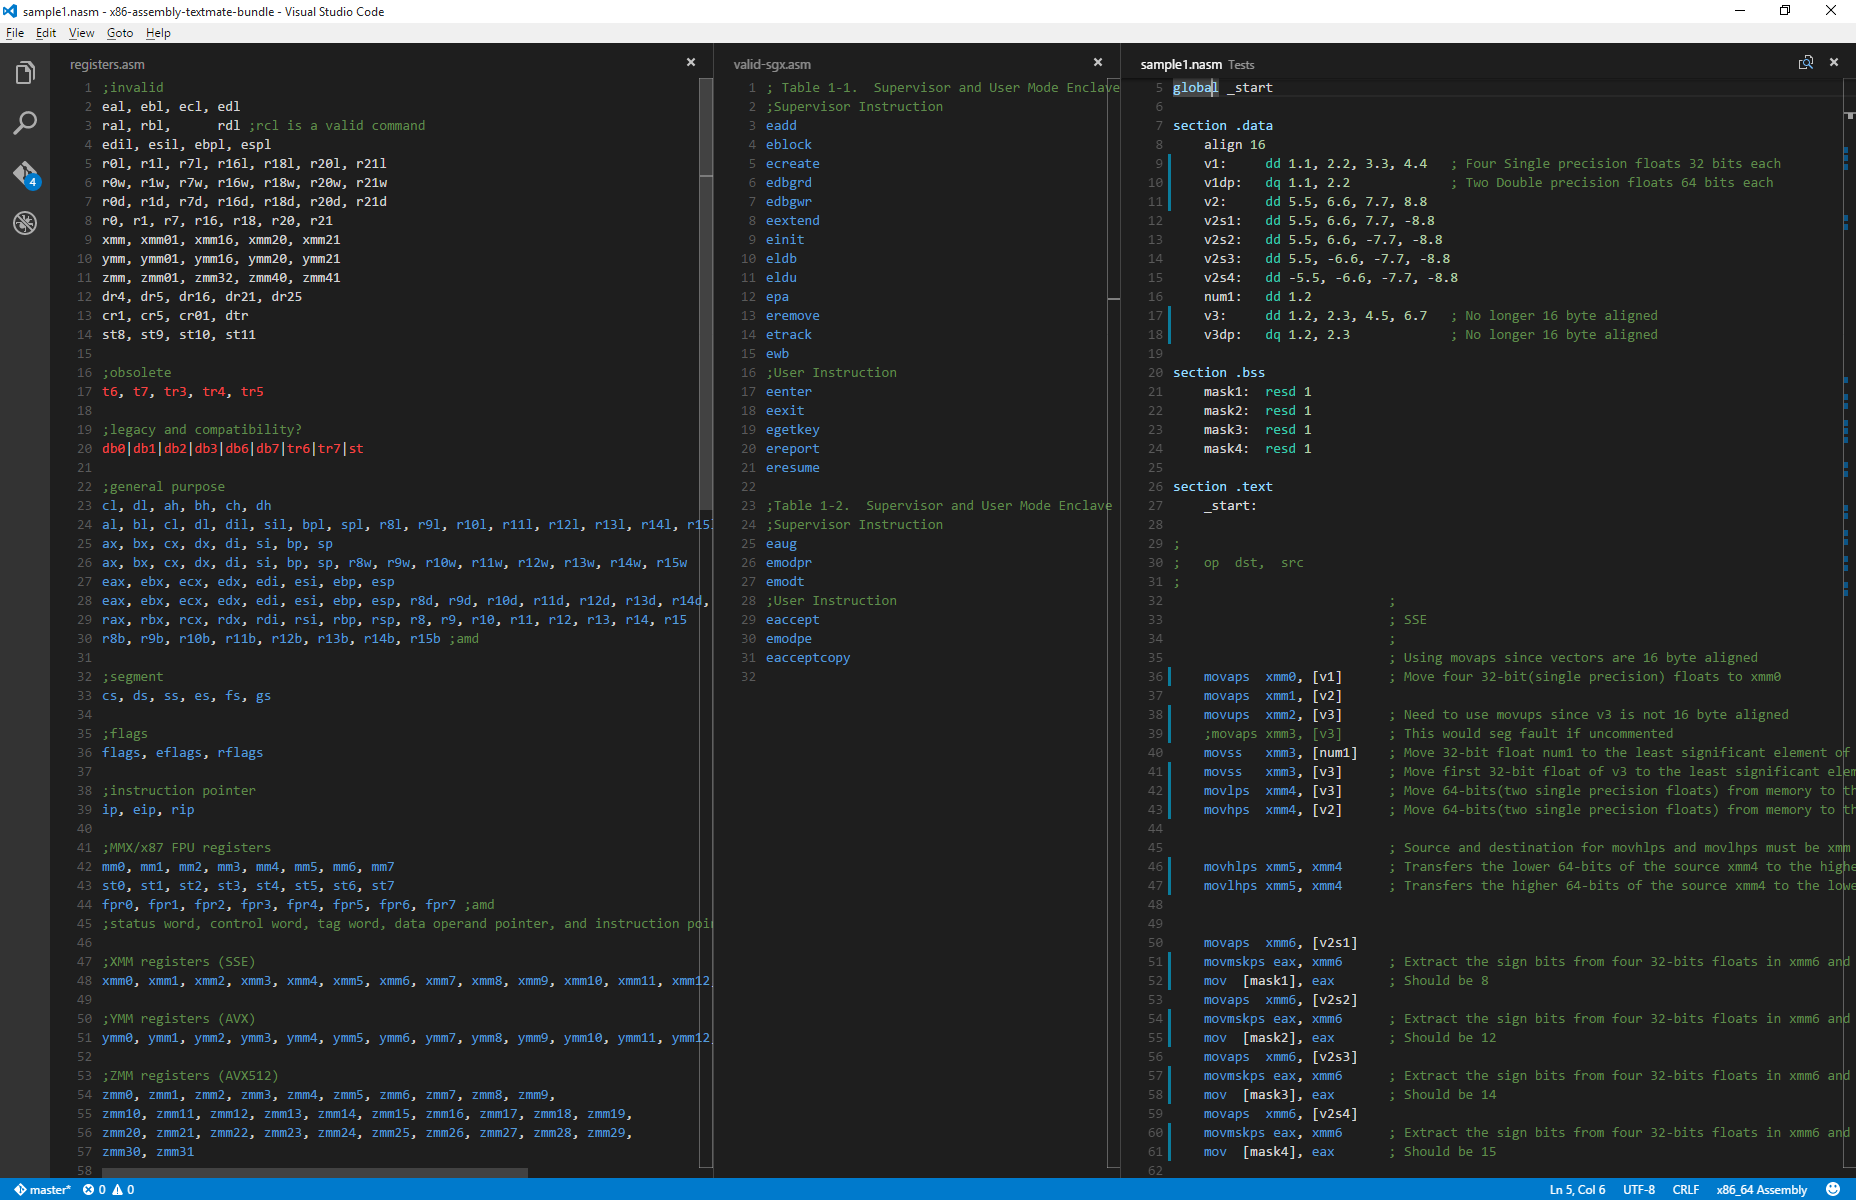 Visual Studio Code with default Dark color theme